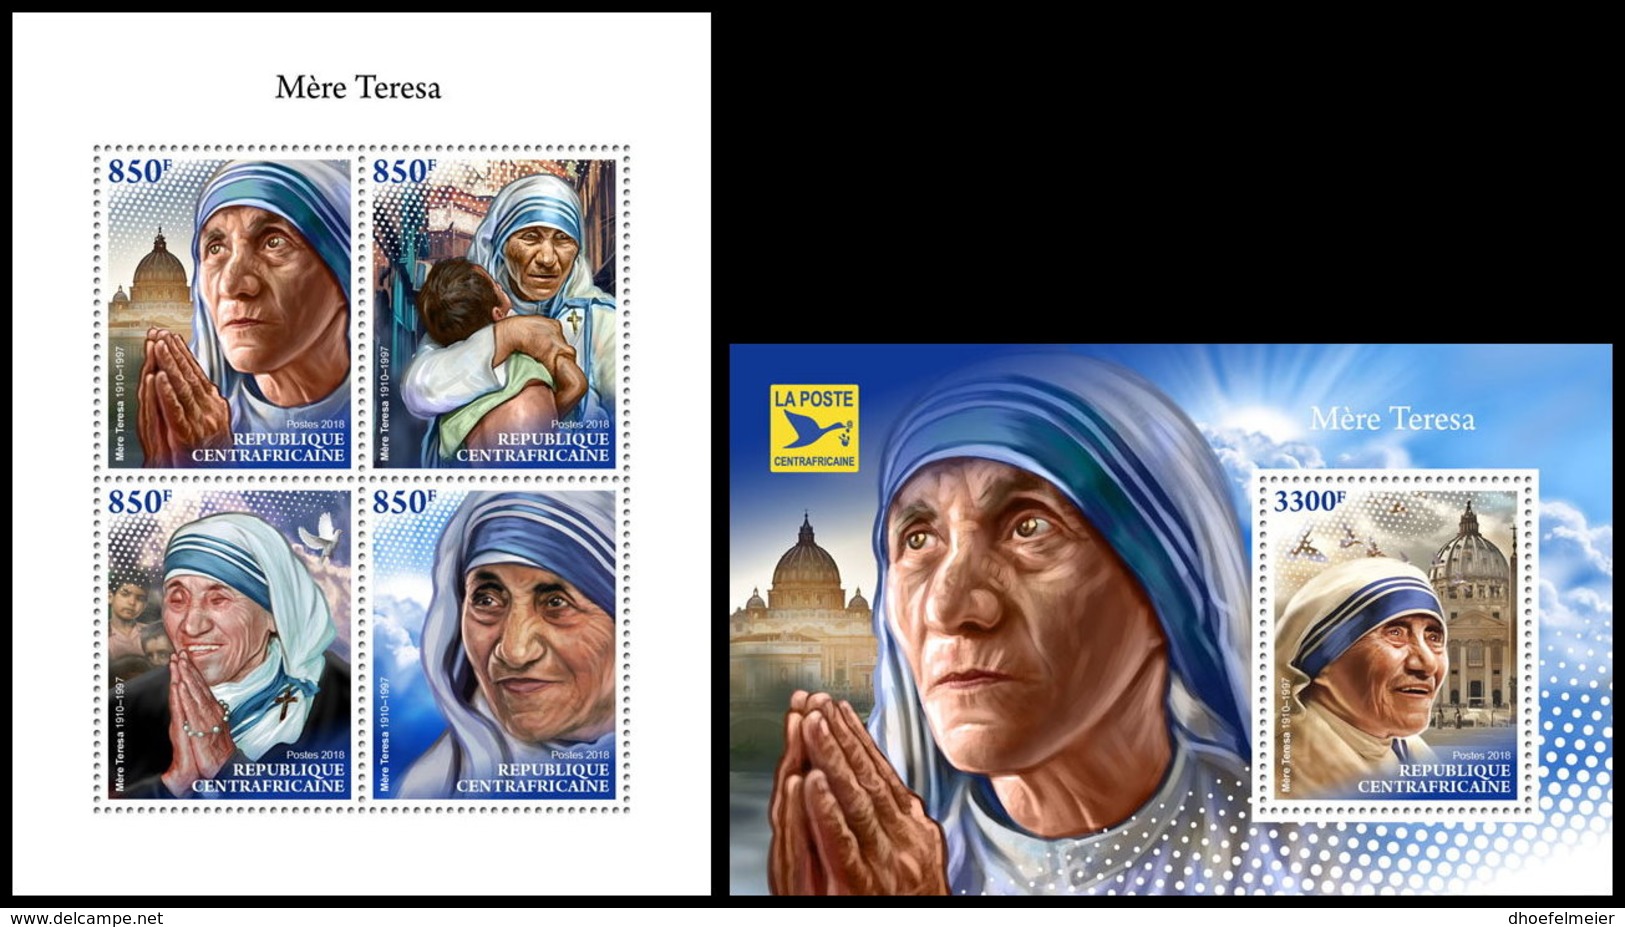 CENTRAL AFRICA 2018 **MNH Mother Teresa Mutter Teresa Mere Teresa M/S+S/S - OFFICIAL ISSUE - DH1845 - Mother Teresa